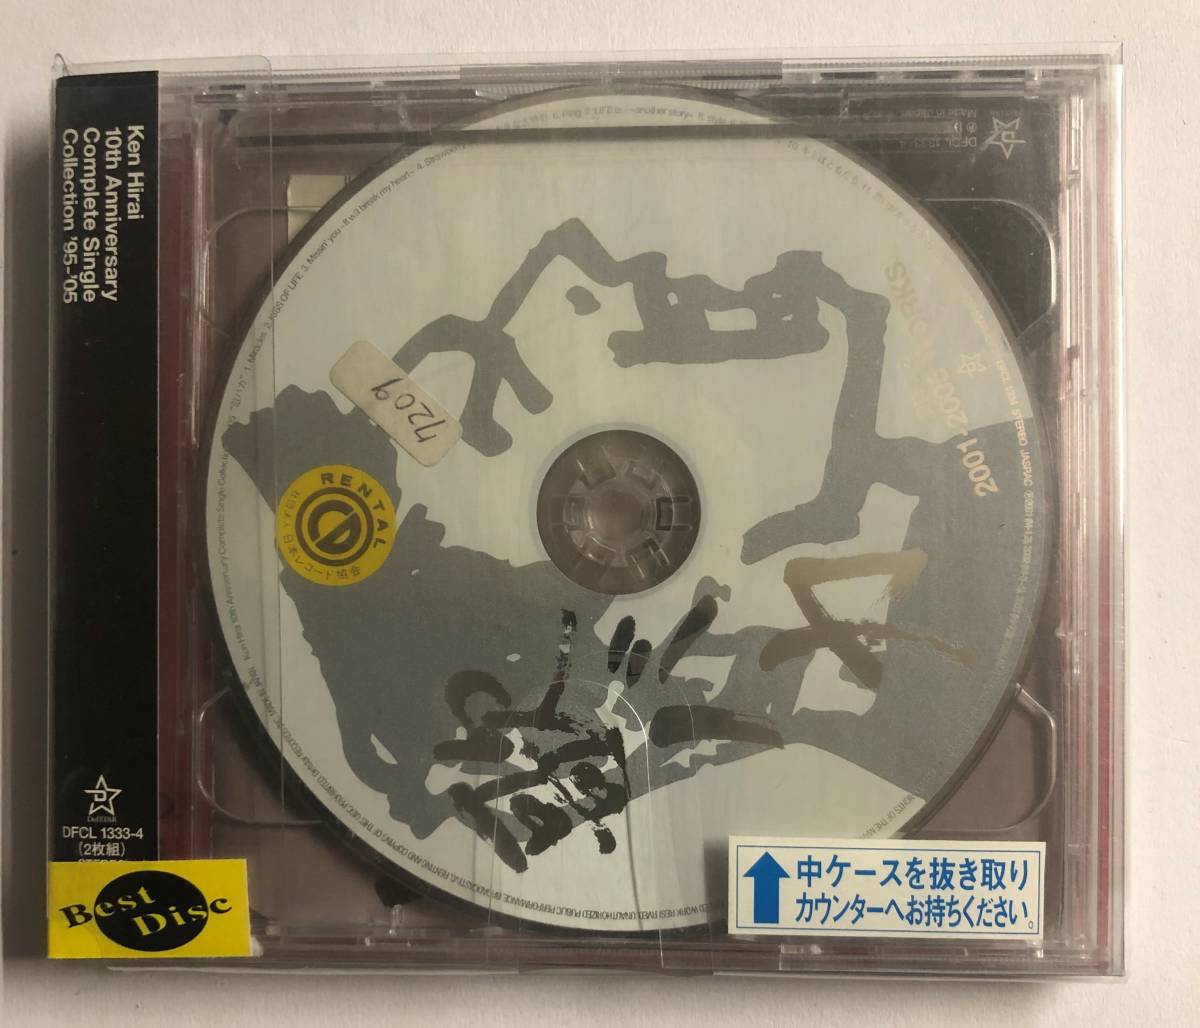 【CD】Ken Hirai 10th Anniversary Complete Single Collection '95-'05 歌バカ【レンタル落ち】@CD-09U_画像1